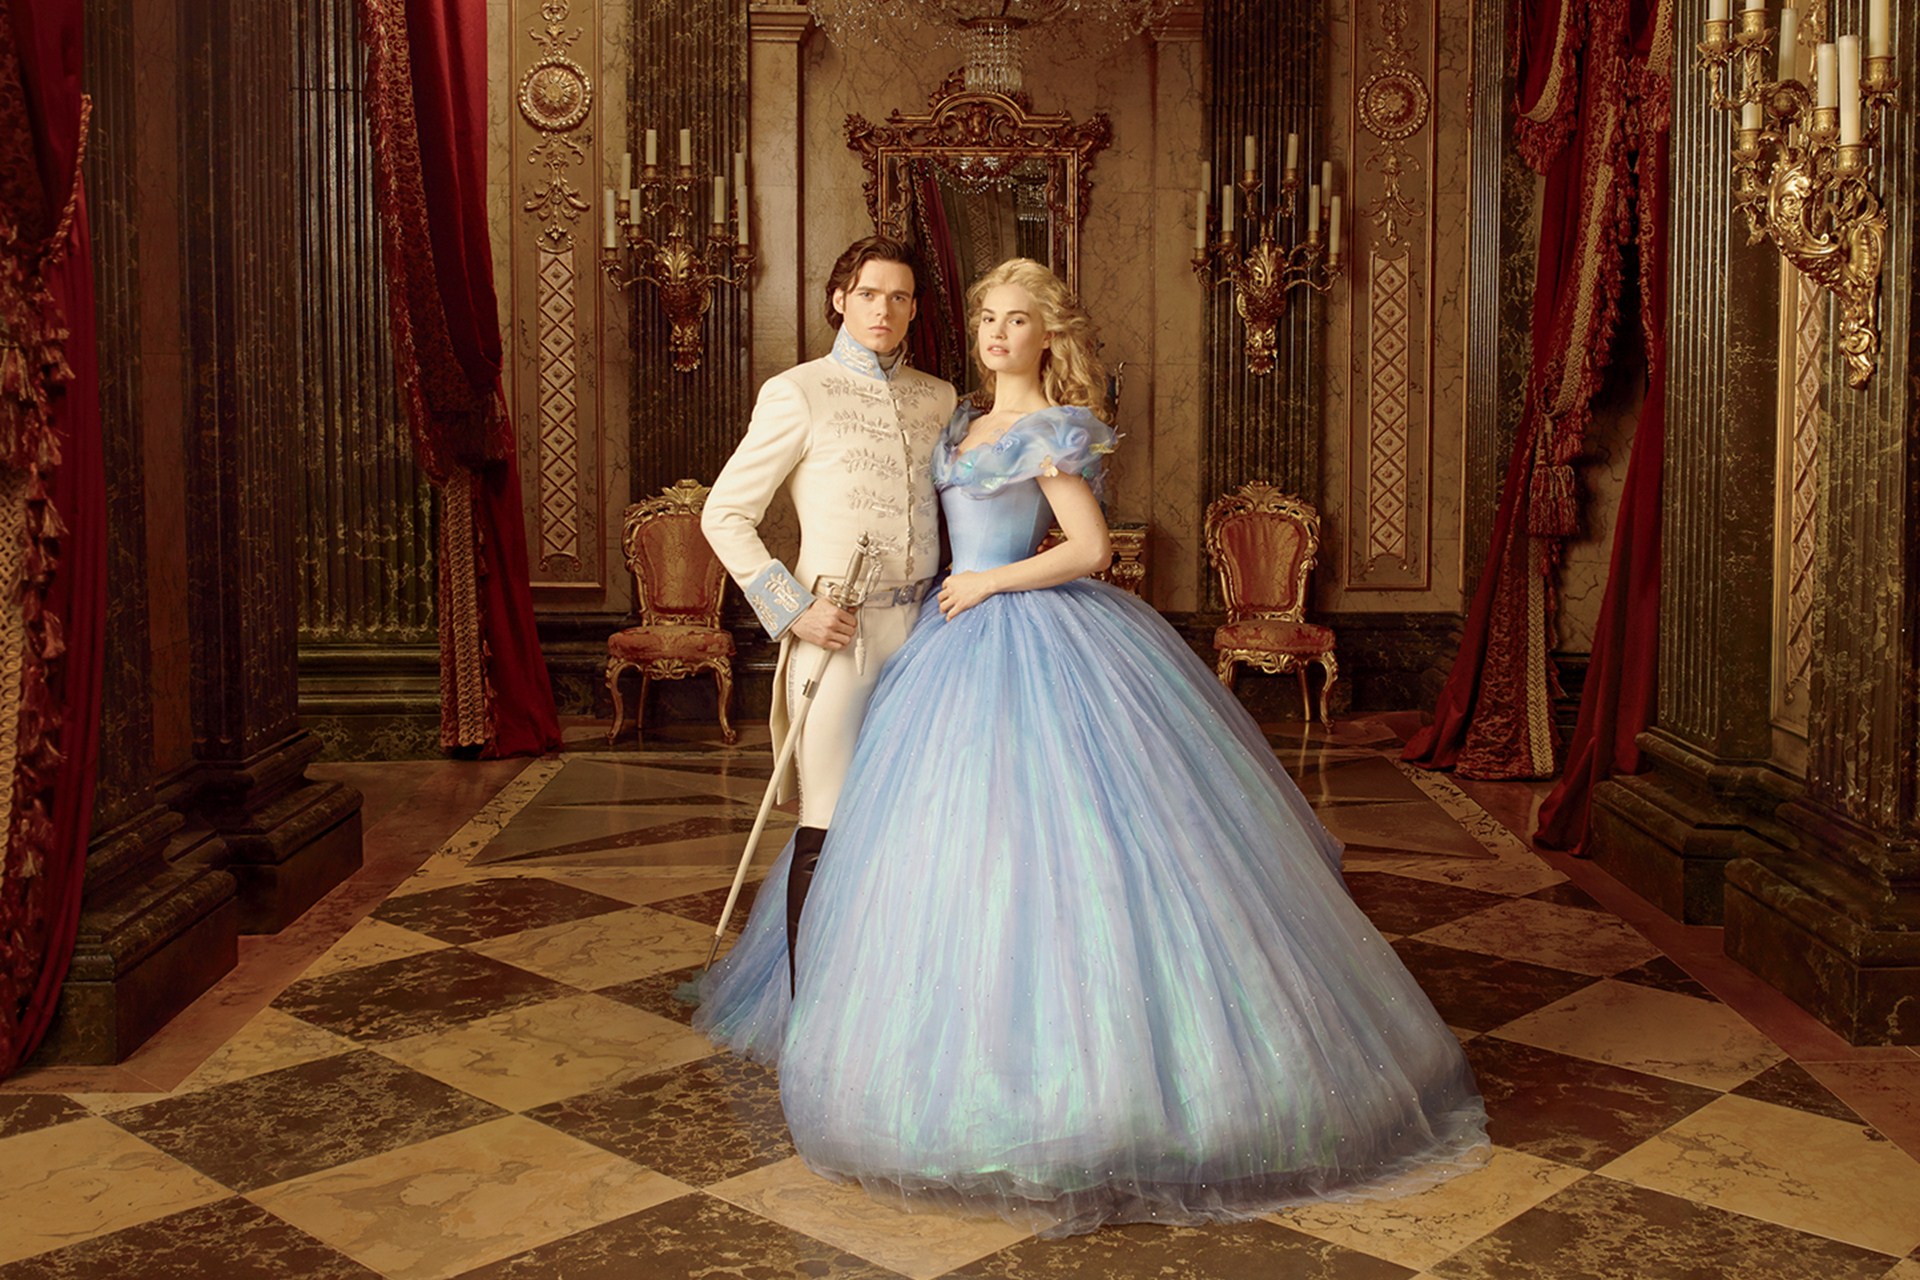 Amazing Cinderella (2015) Pictures & Backgrounds